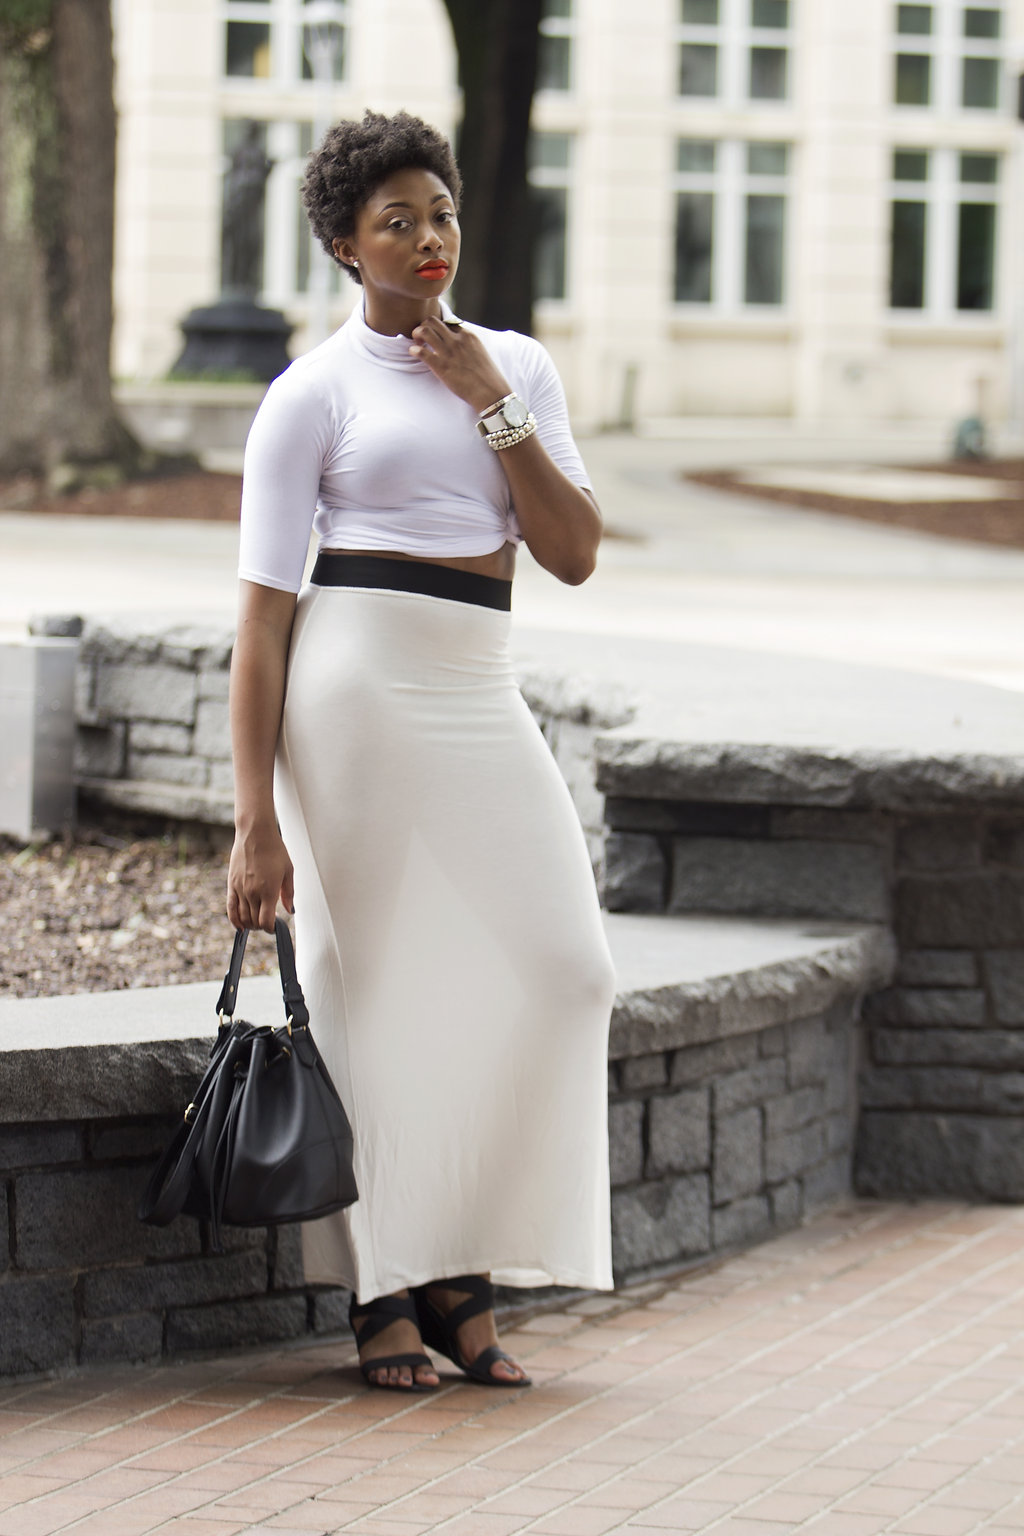 baton rouge street style, southern fashion blogger